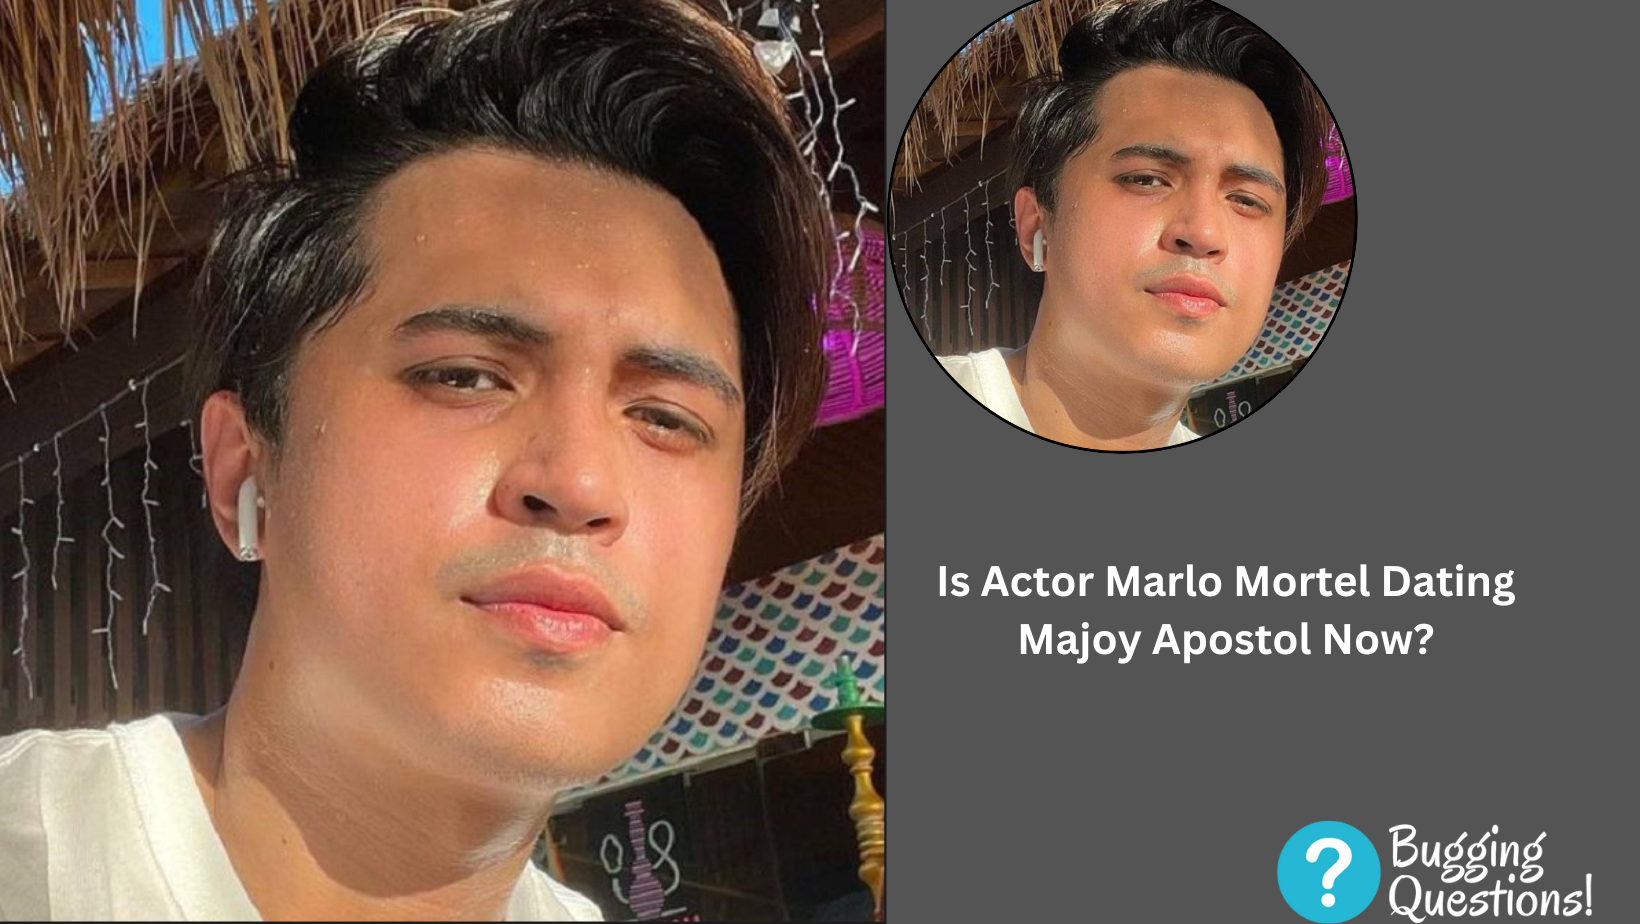 Is Actor Marlo Mortel Dating Majoy Apostol Now?